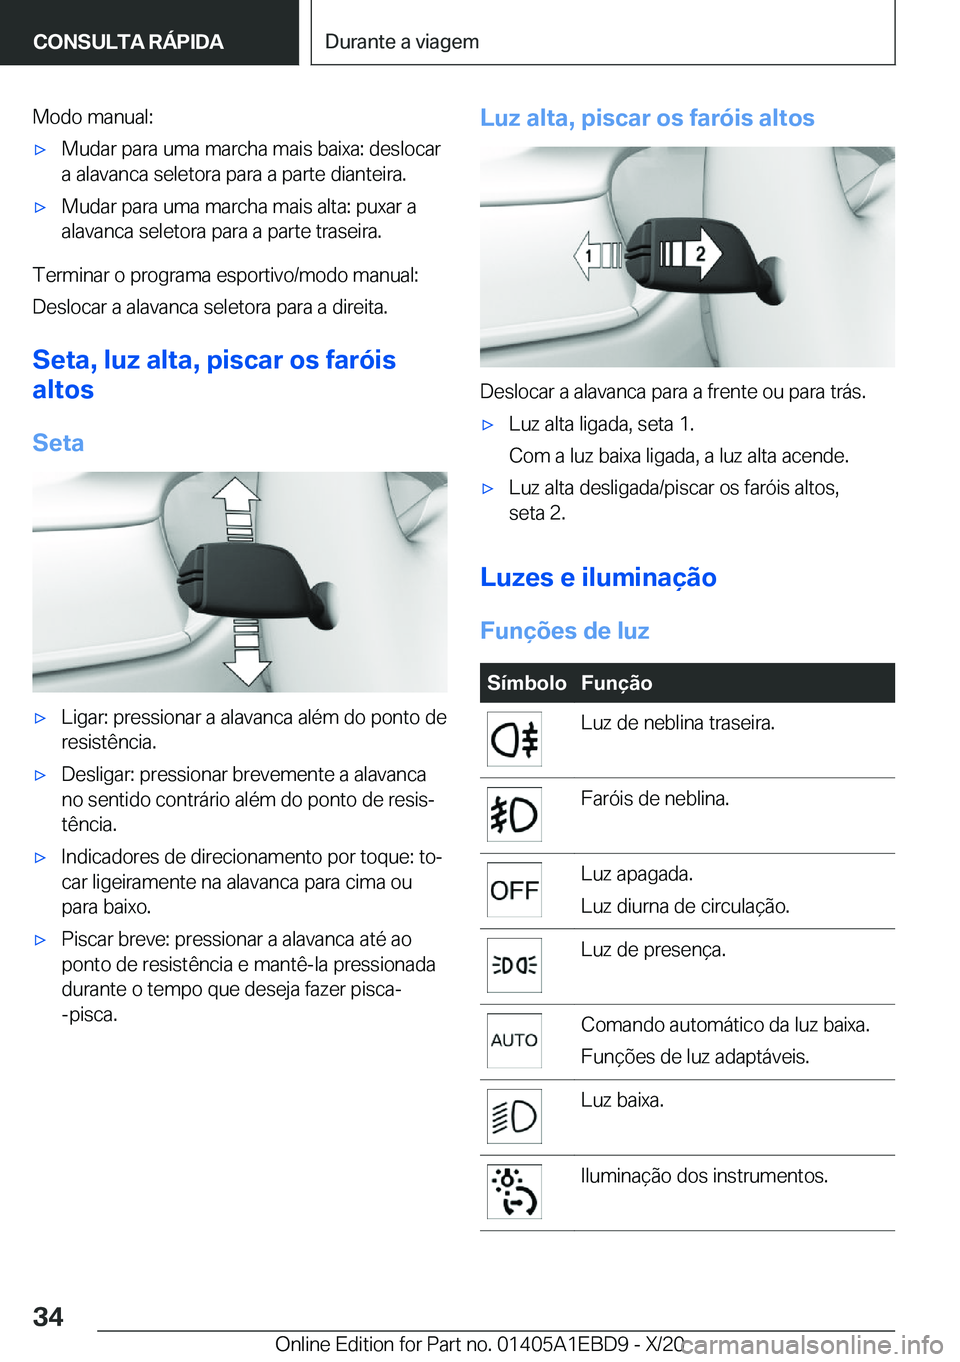 BMW 3 SERIES 2021  Manual do condutor (in Portuguese) �M�o�d�o��m�a�n�u�a�l�:x�M�u�d�a�r��p�a�r�a��u�m�a��m�a�r�c�h�a��m�a�i�s��b�a�i�x�a�:��d�e�s�l�o�c�a�r�a��a�l�a�v�a�n�c�a��s�e�l�e�t�o�r�a��p�a�r�a��a��p�a�r�t�e��d�i�a�n�t�e�i�r�a�.x�M